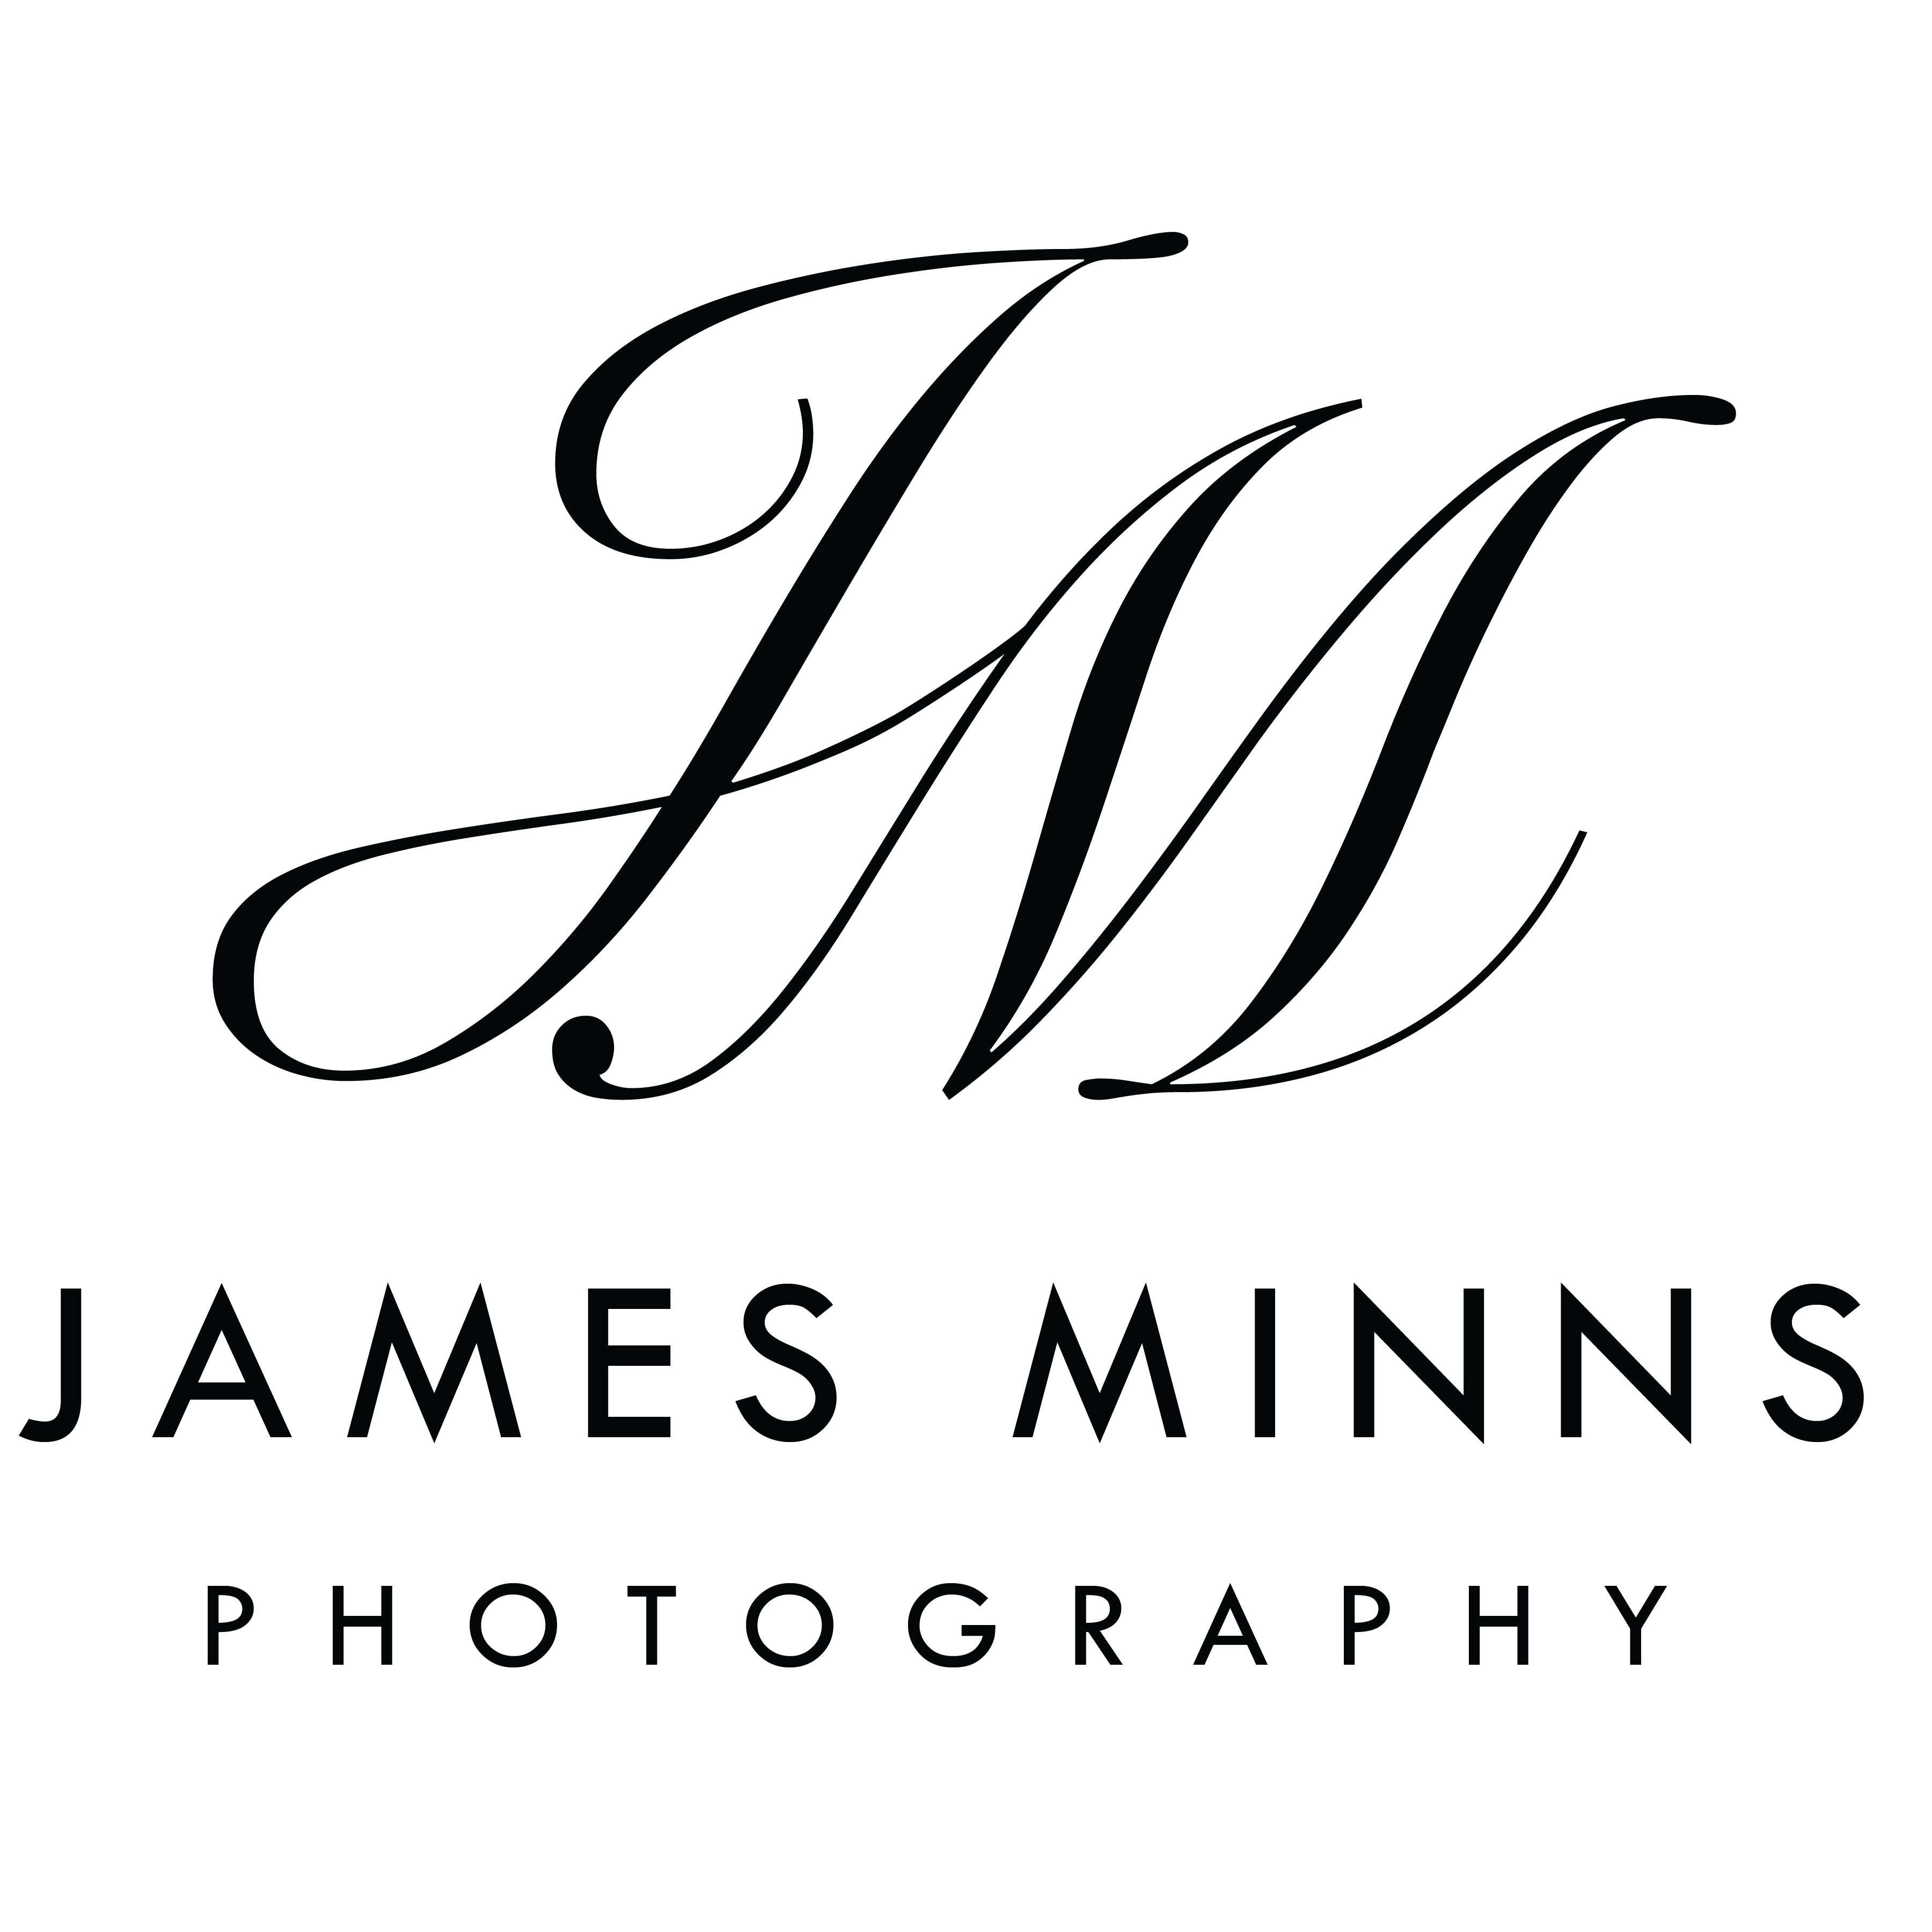 James Minns Photography